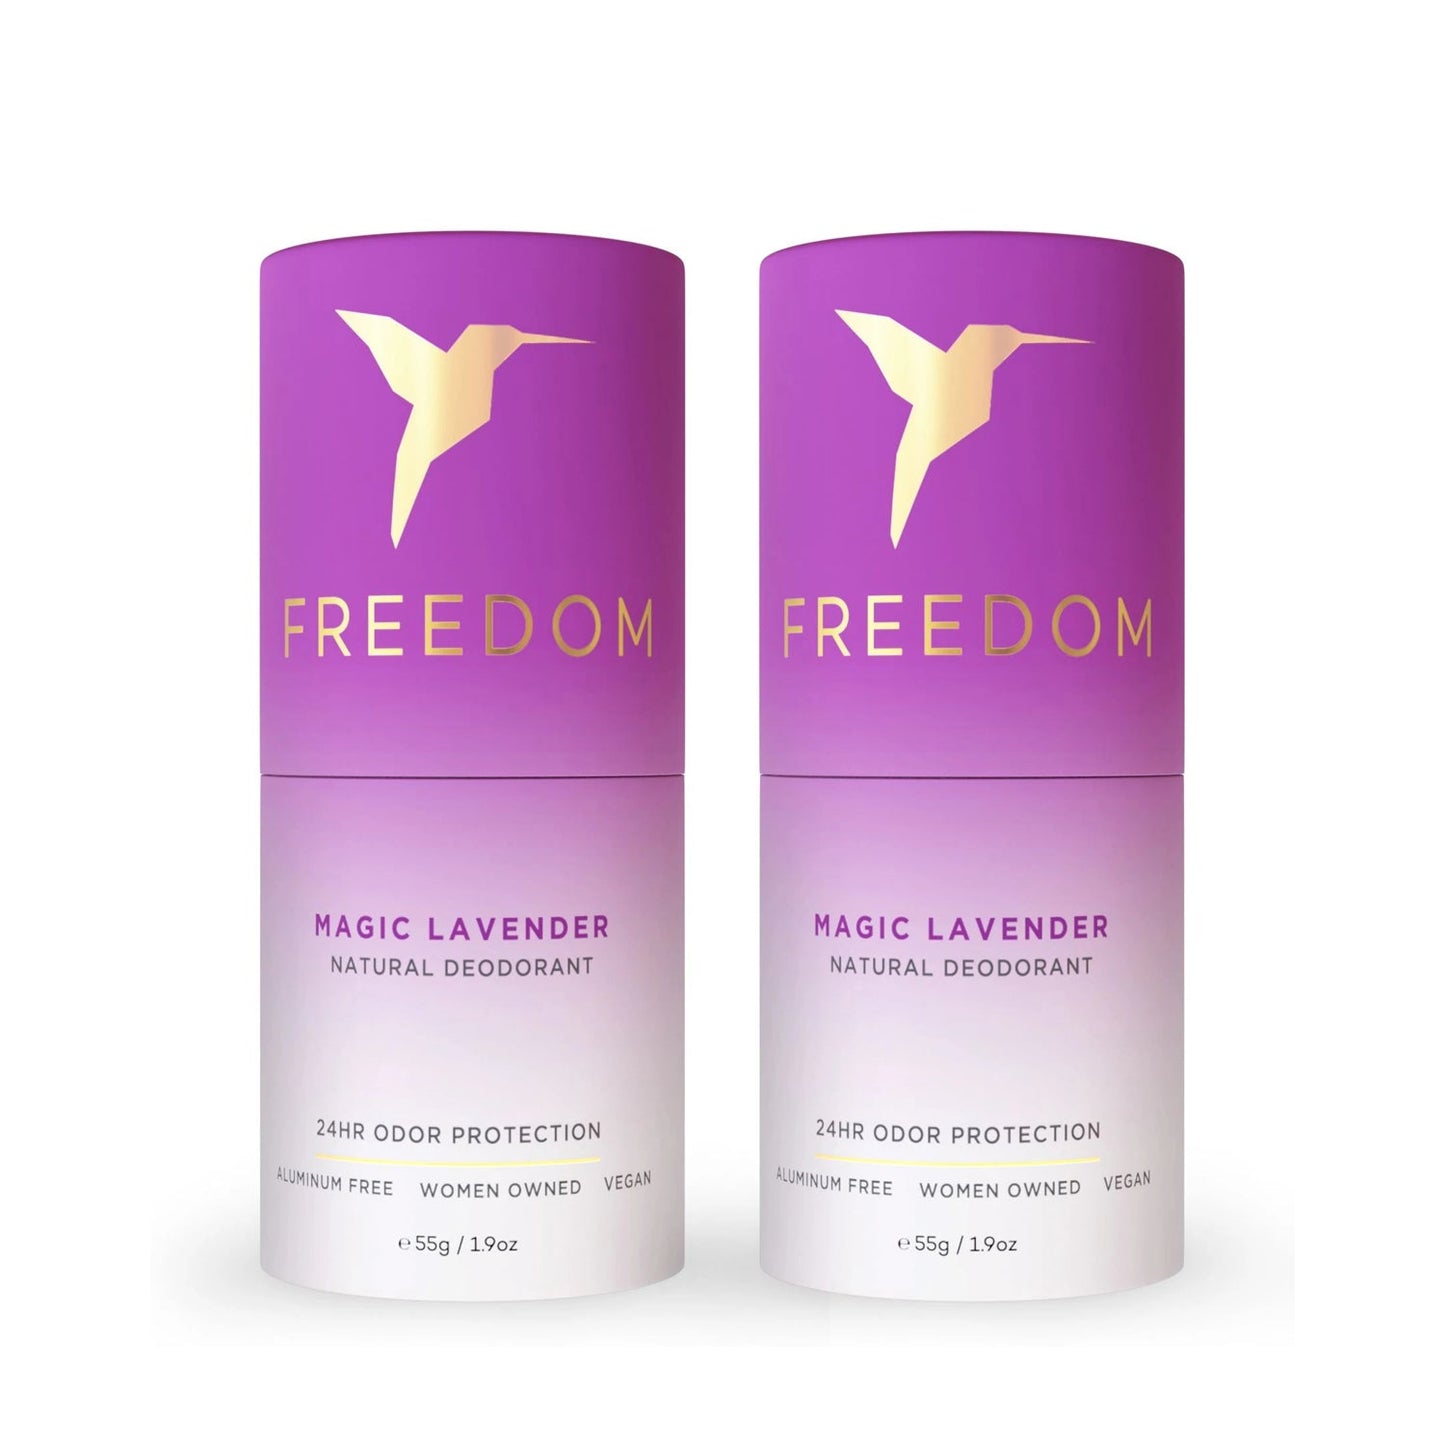 All Natural Deodorant - Eco Friendly! Deodorant Freedom Magic Lavender (Eco-Friendly Paper) 2-Pack 